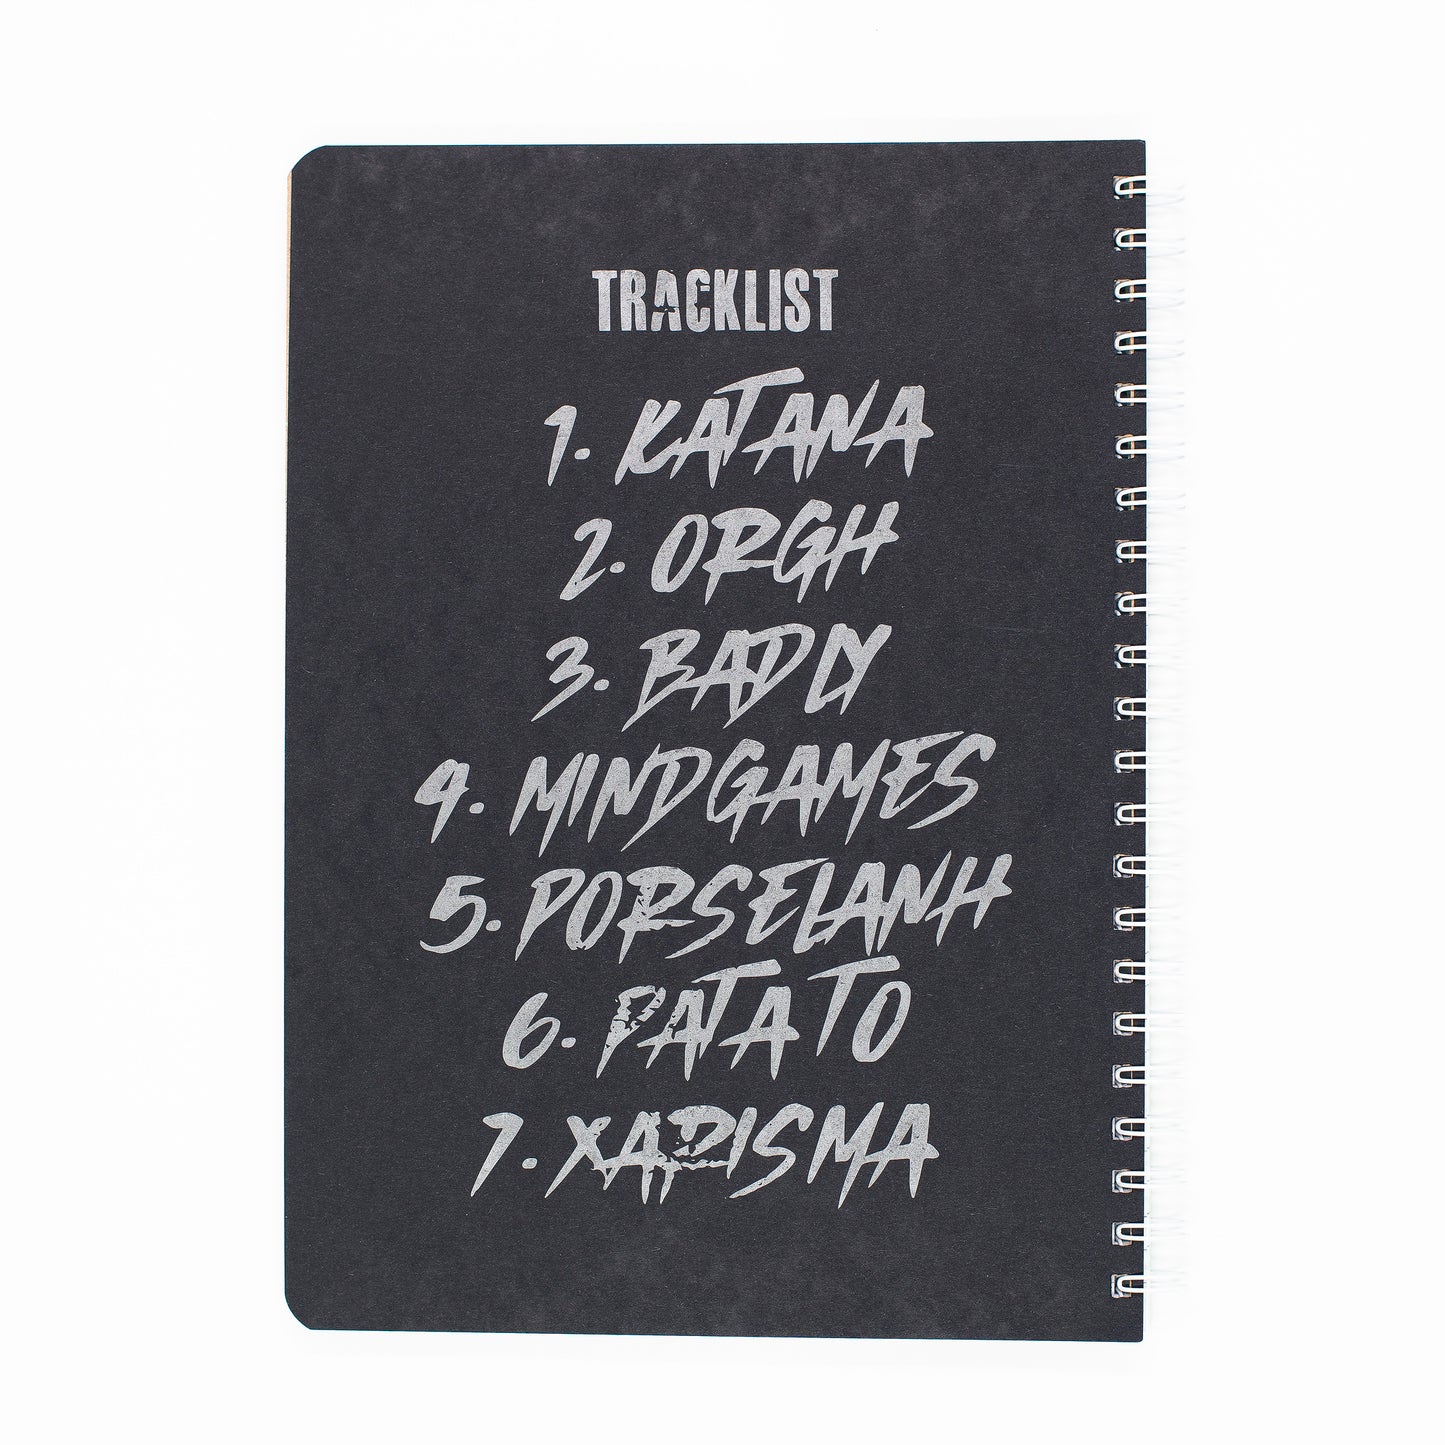 Notebook Immune ''Take Notes'' Black